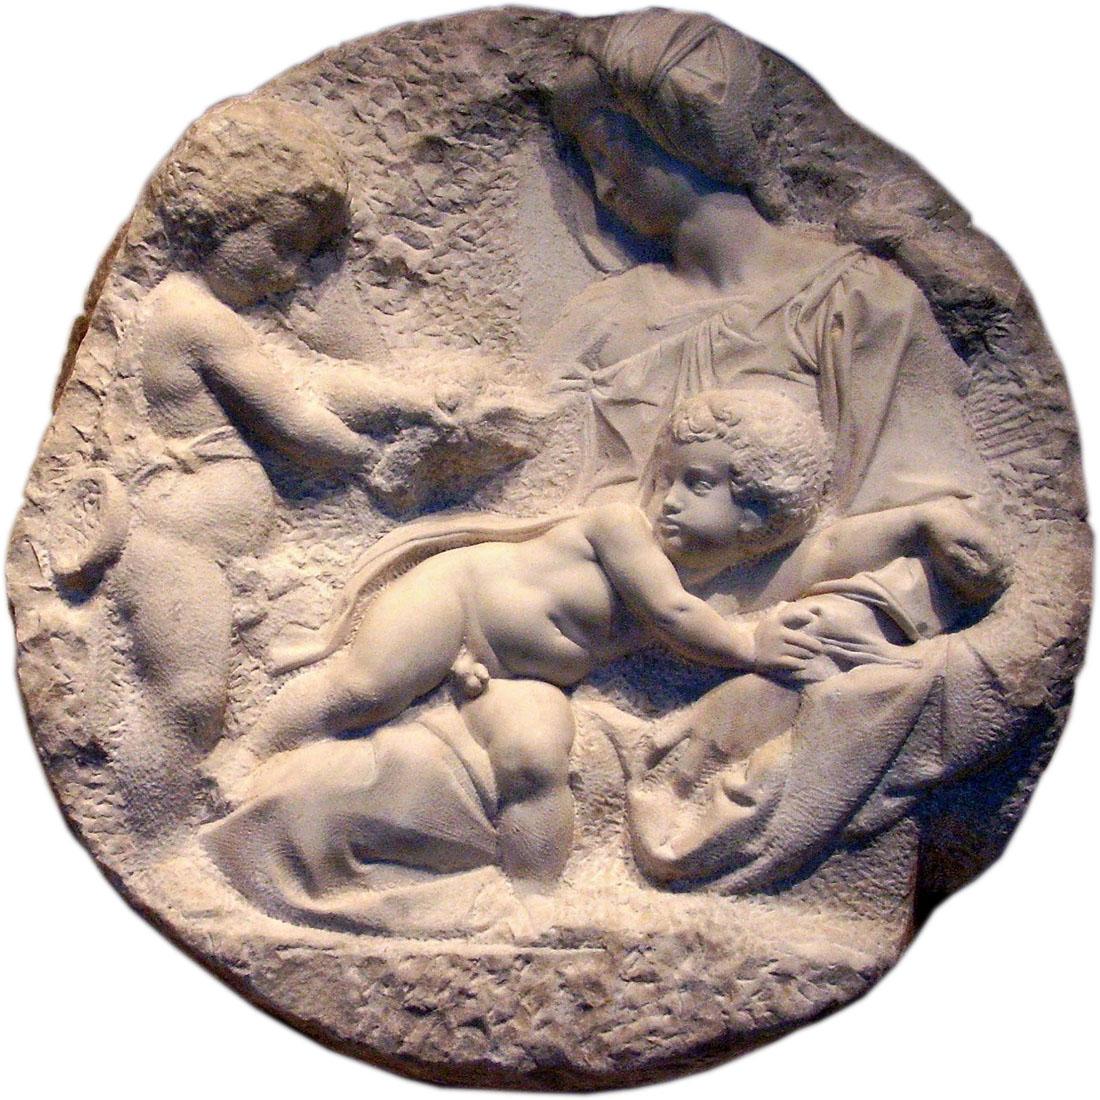 Michelangelo Buonarroti. Tondo Teddei. 1504-1506. Royal Academy of Arts, London